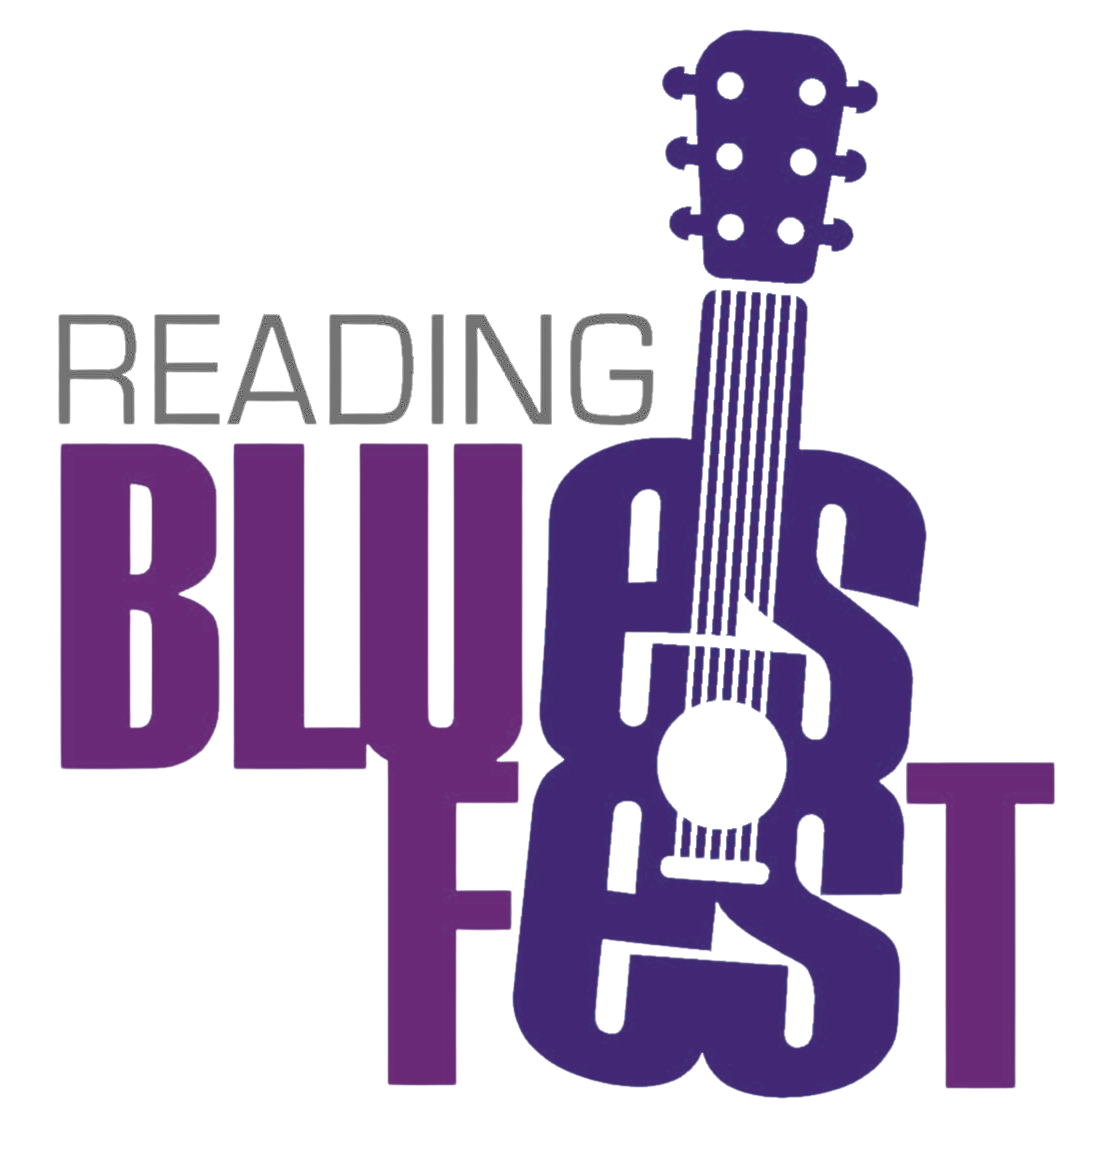 Reading Blues Fest